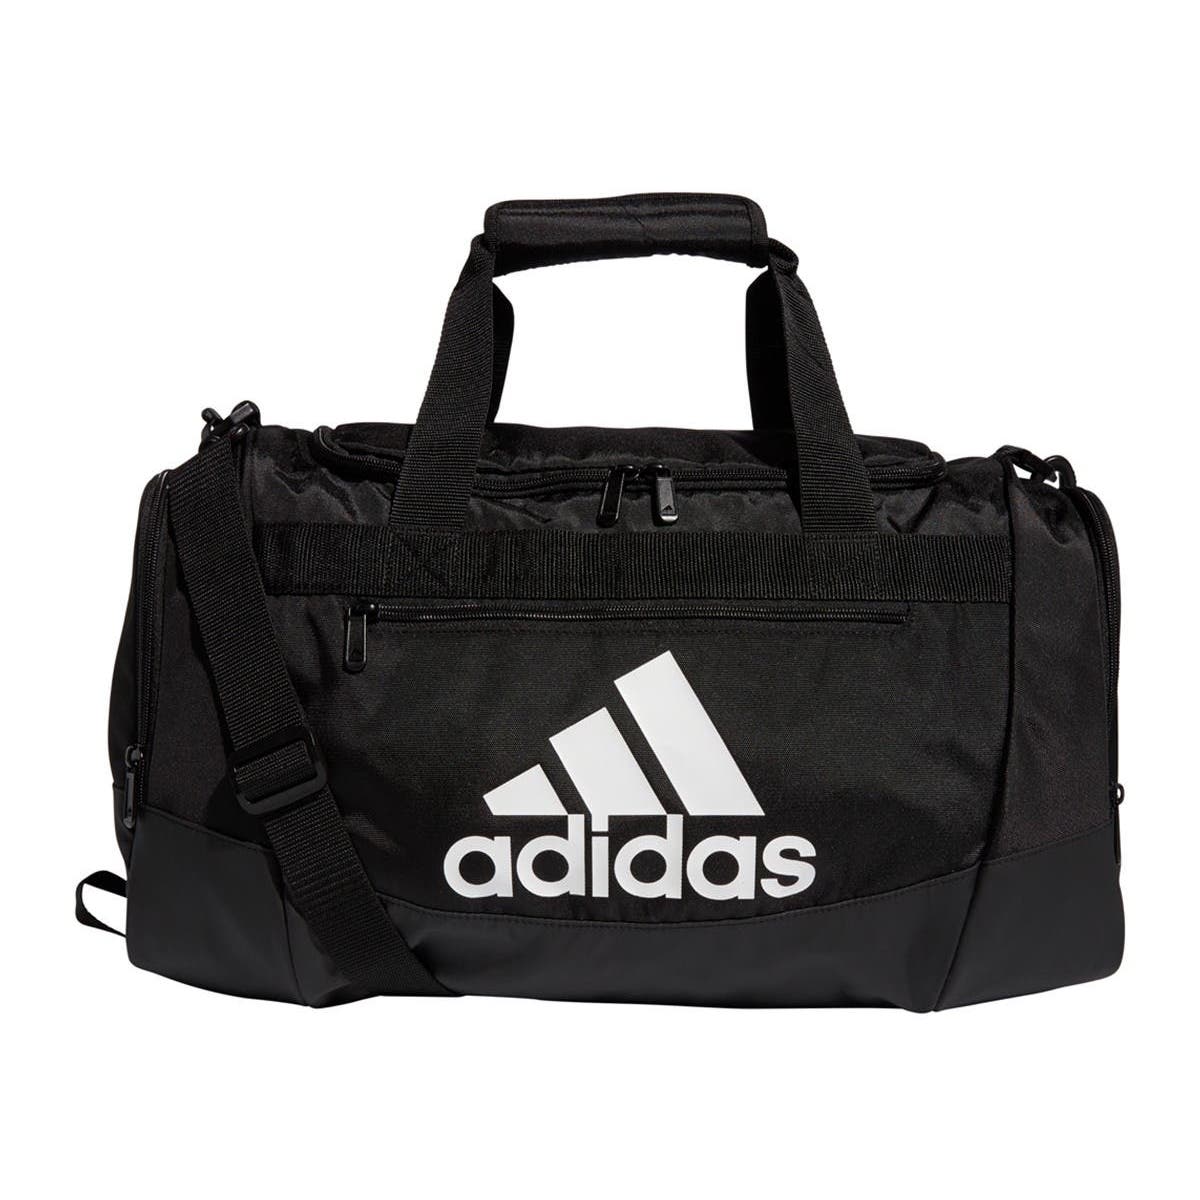 Adidas Defender IV Small Duffel Bag - Black-White (Front)